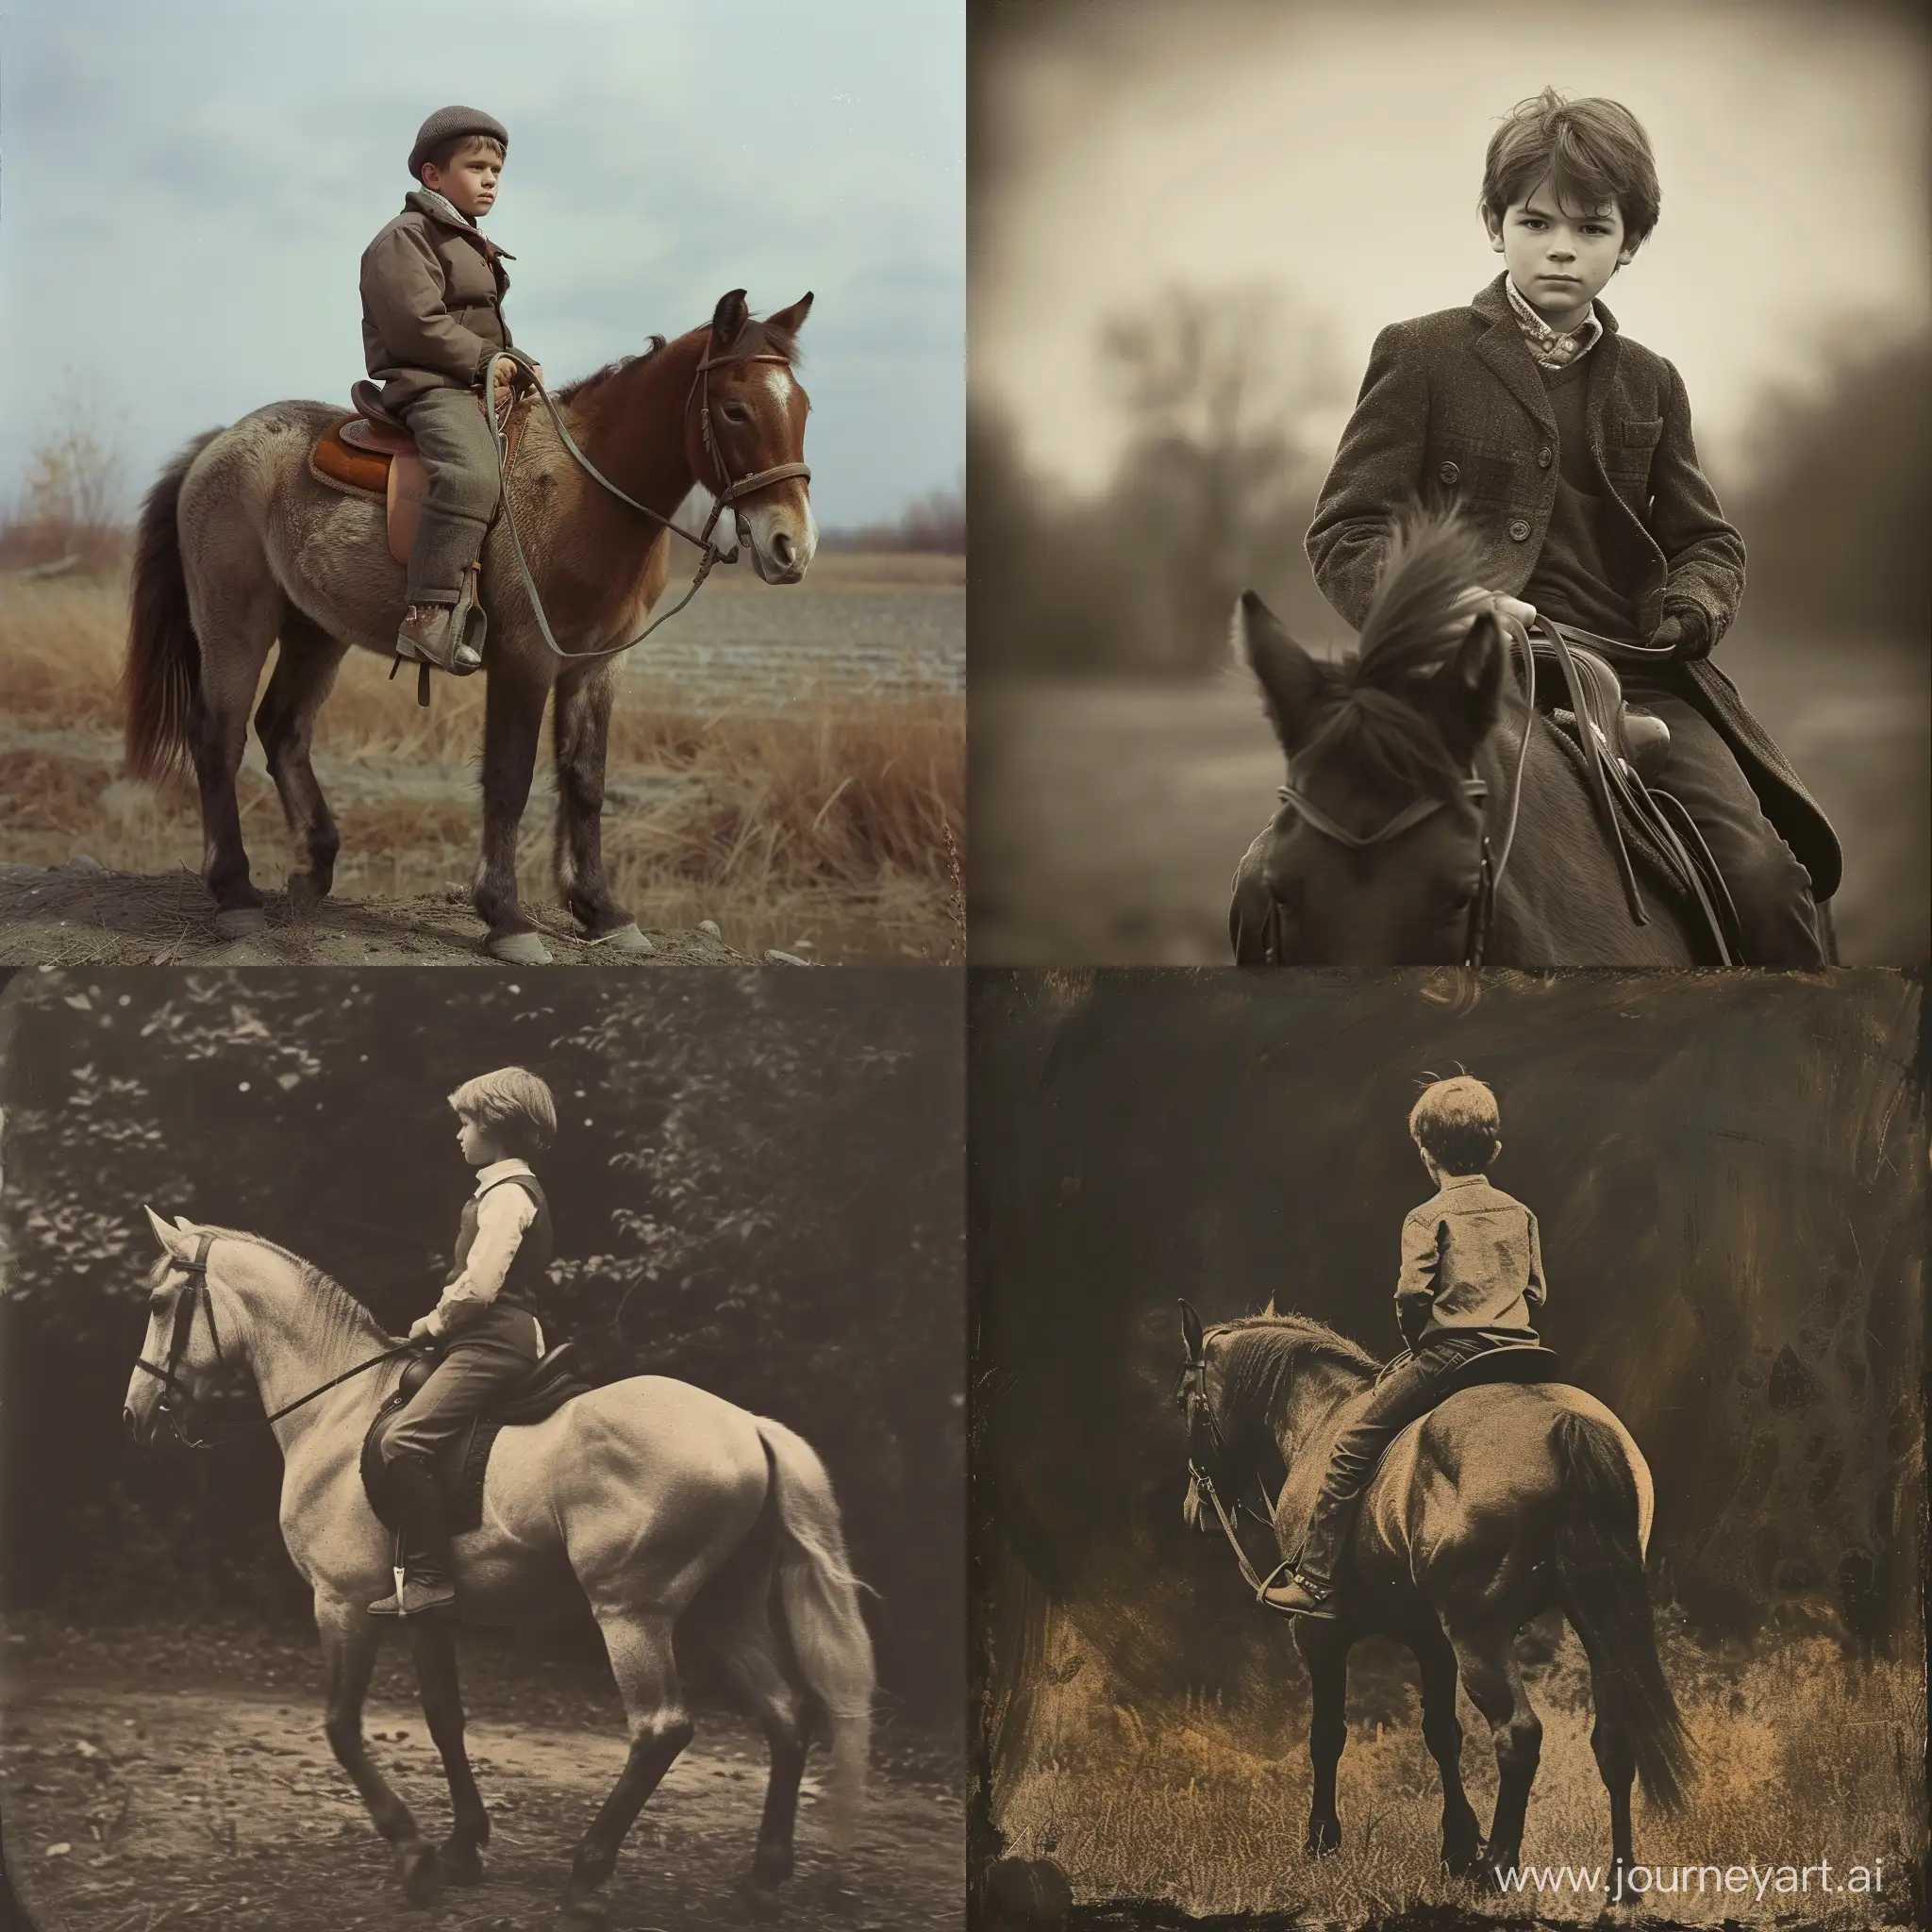 Adventurous-12YearOld-Riding-Horse